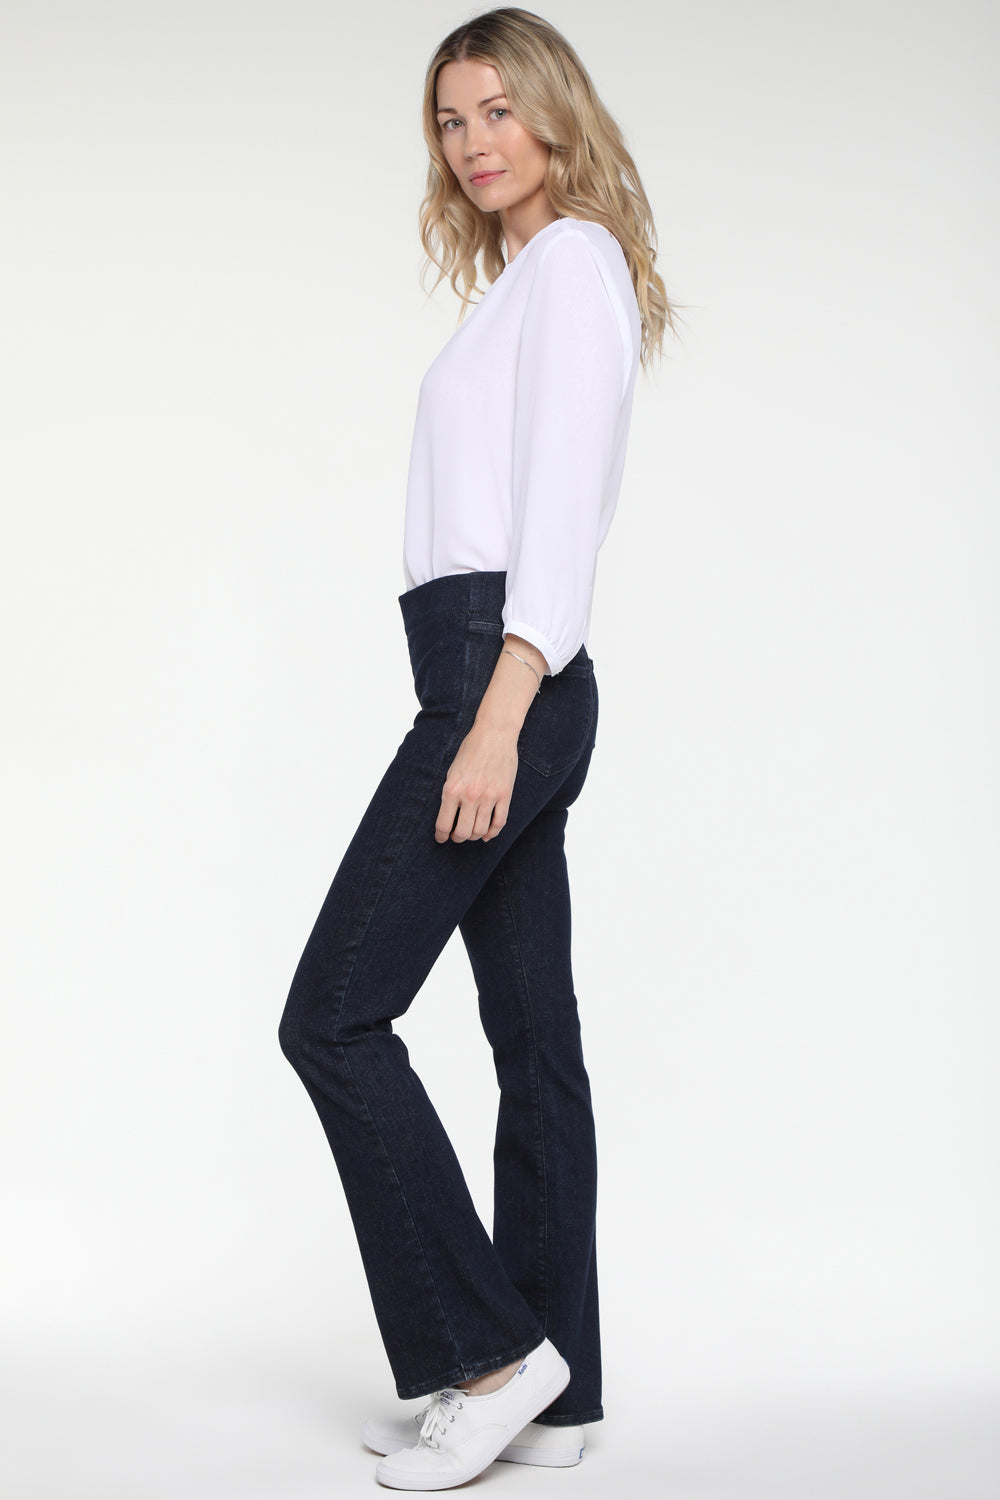 In Langley | NYDJ Slim Pull-On Denim Bootcut - In SpanSpring™ Jeans Blue Petite